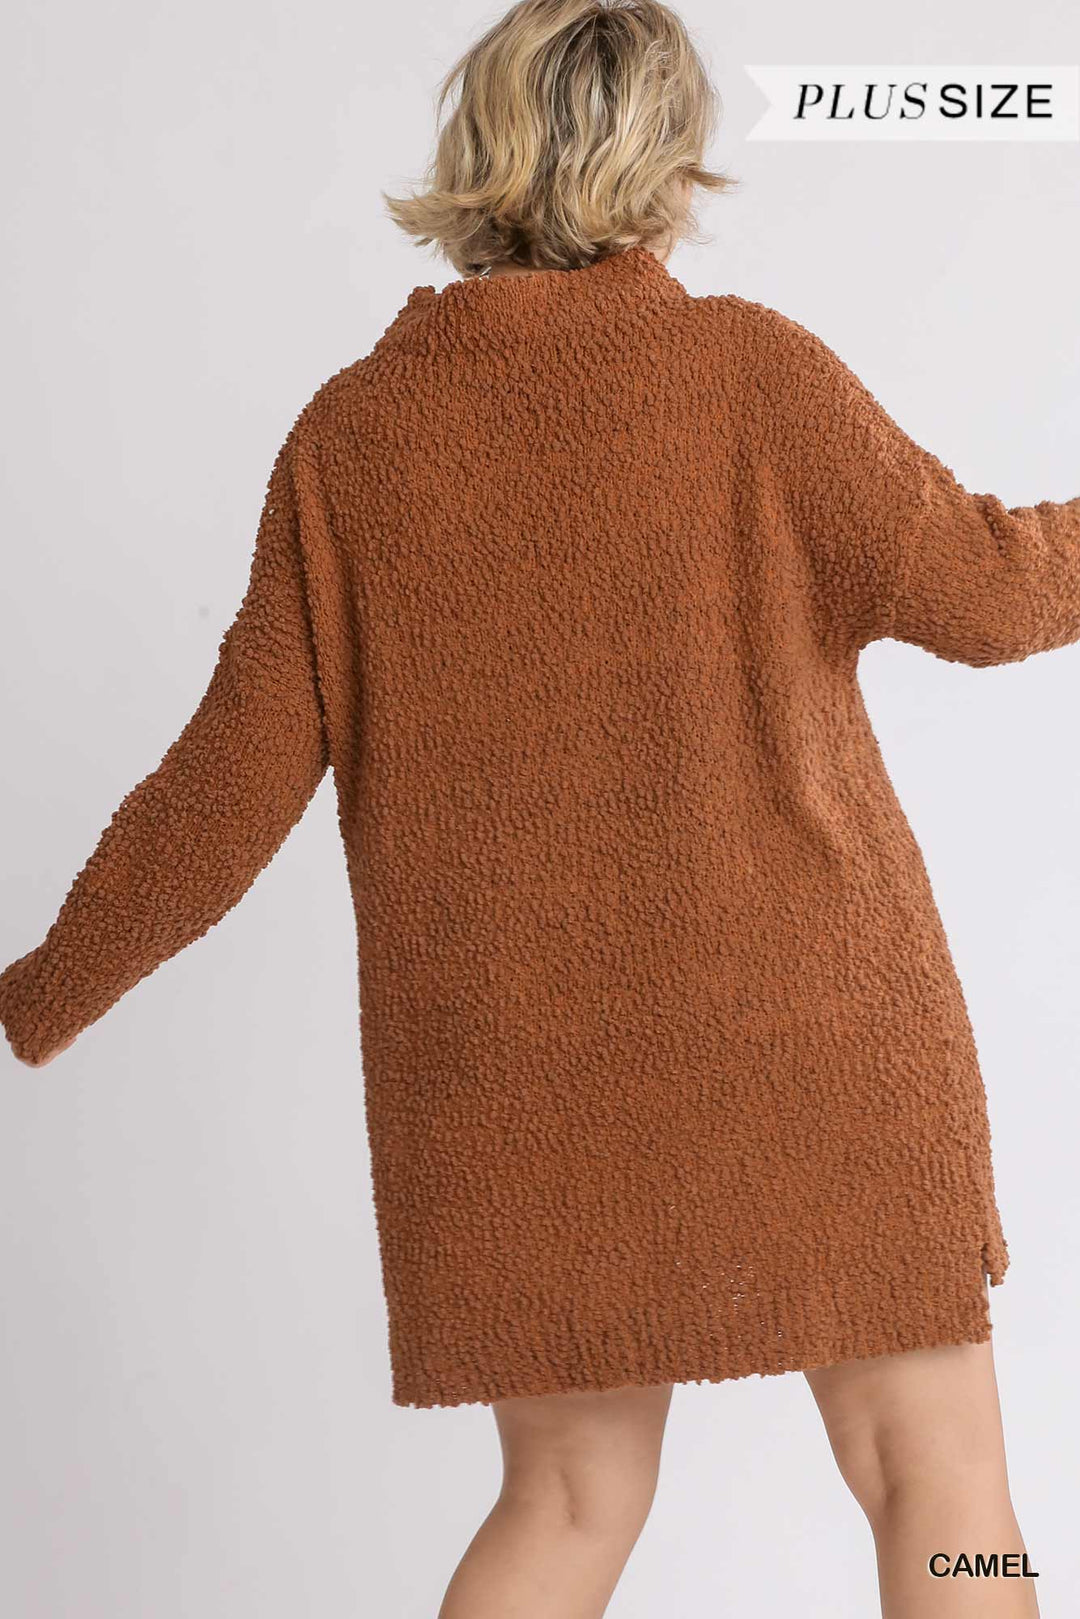 High Cowl Neck Bouclé Long Sleeve Sweater Dress in Camel